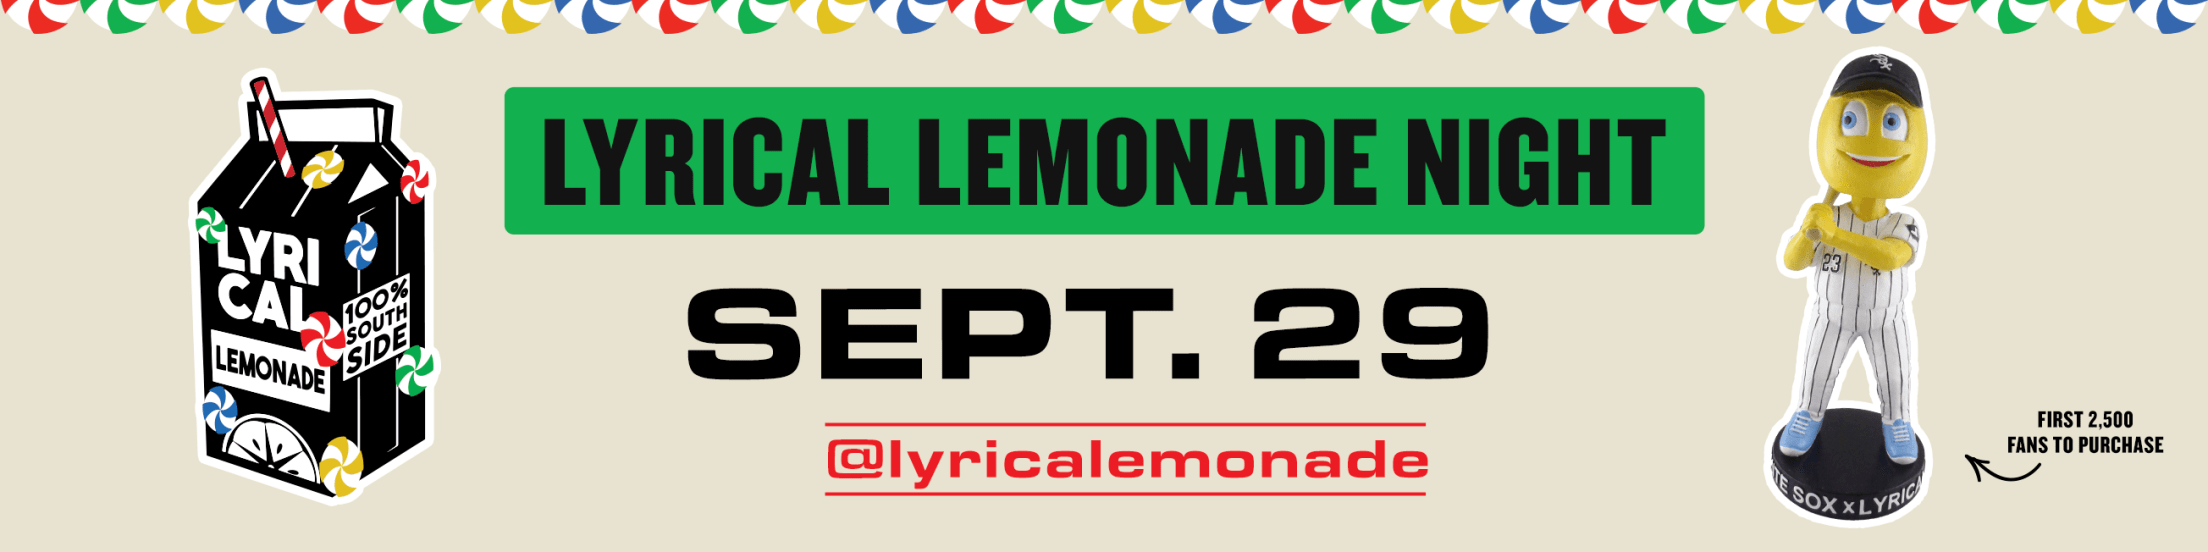 Lyrical Lemonade Night